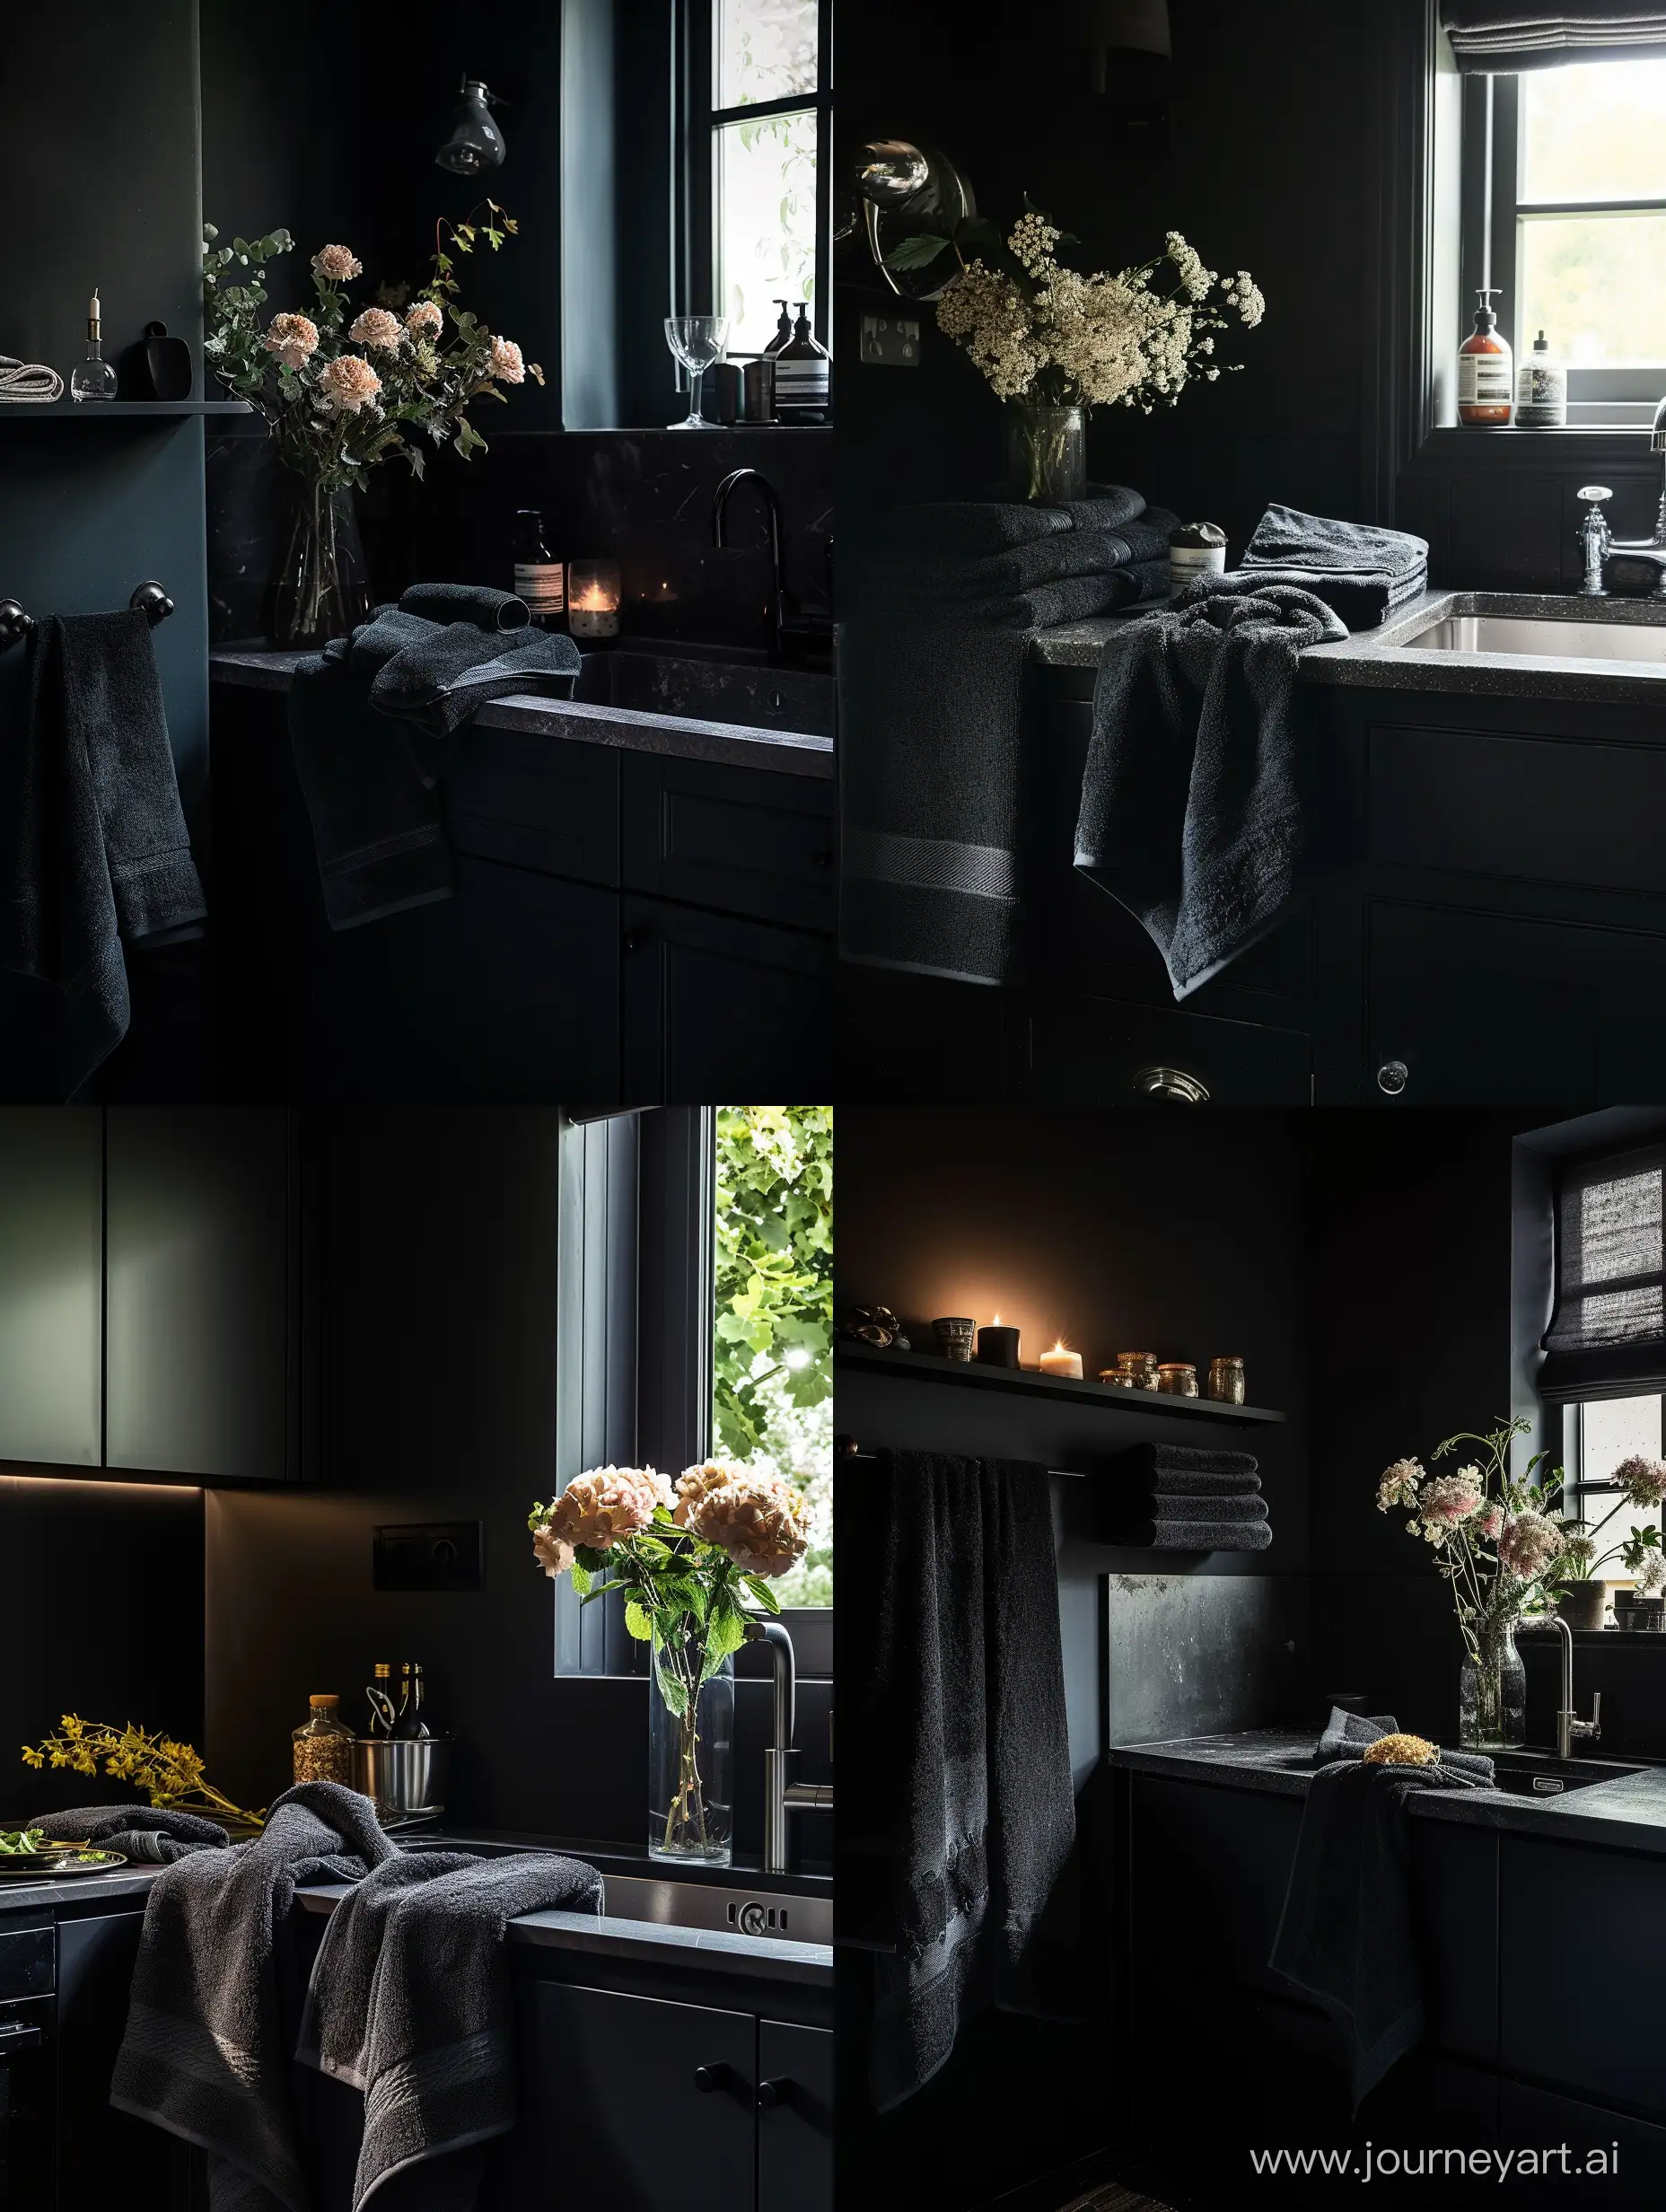 Elegant-Monochrome-Kitchen-Towels-and-Flowers